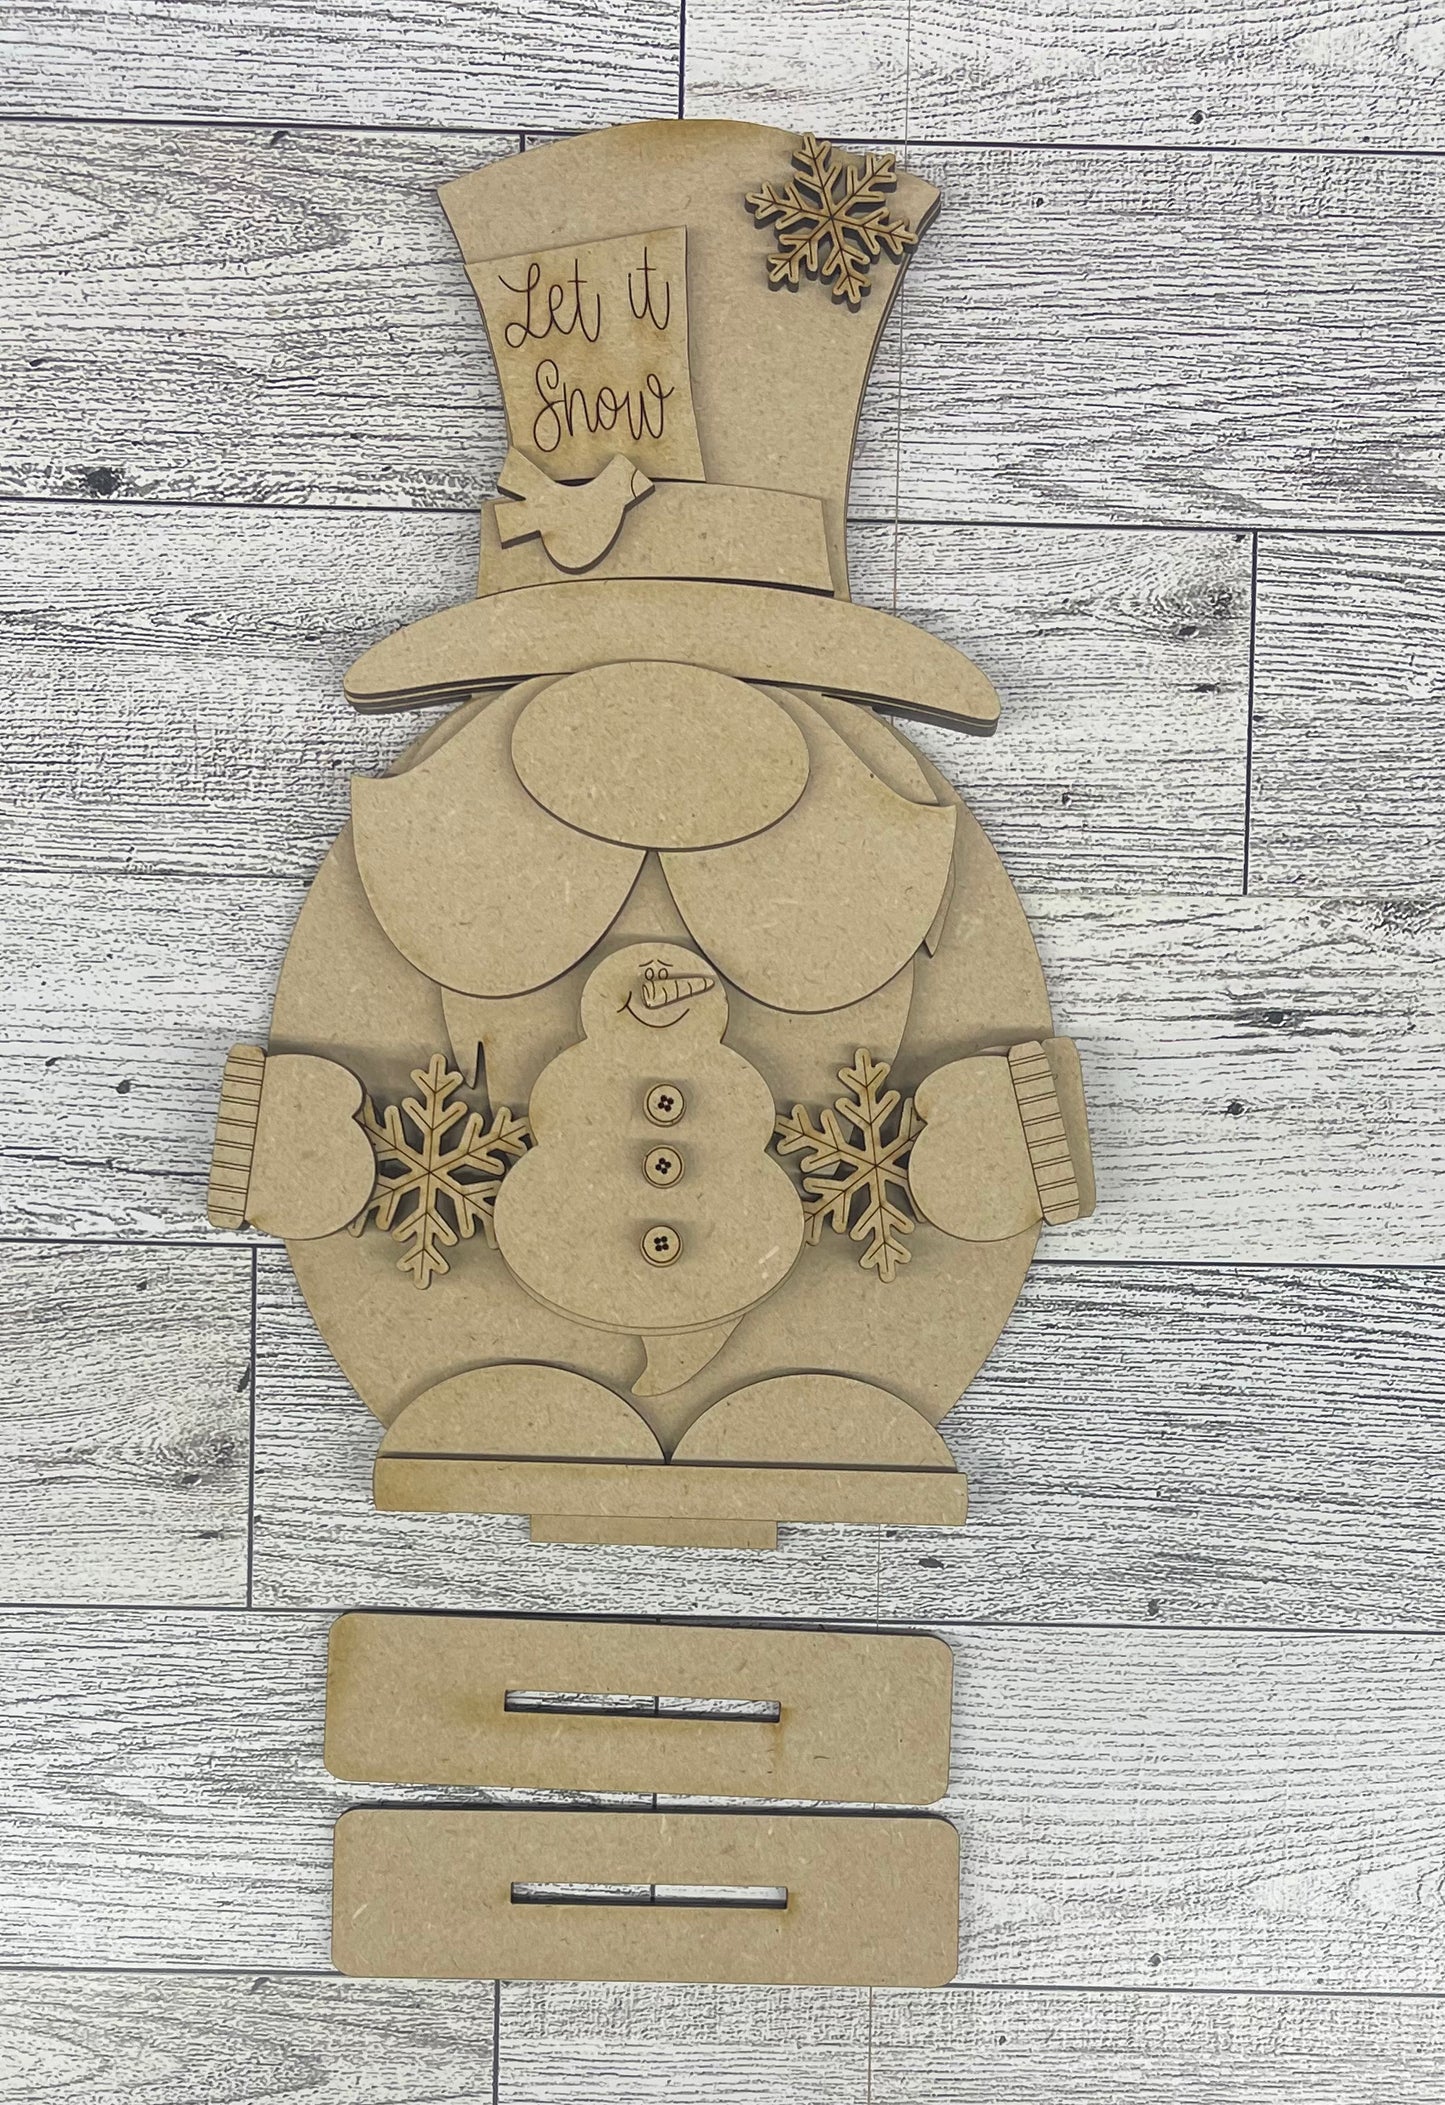 Winter Gnome holding Snowman unpainted cutouts